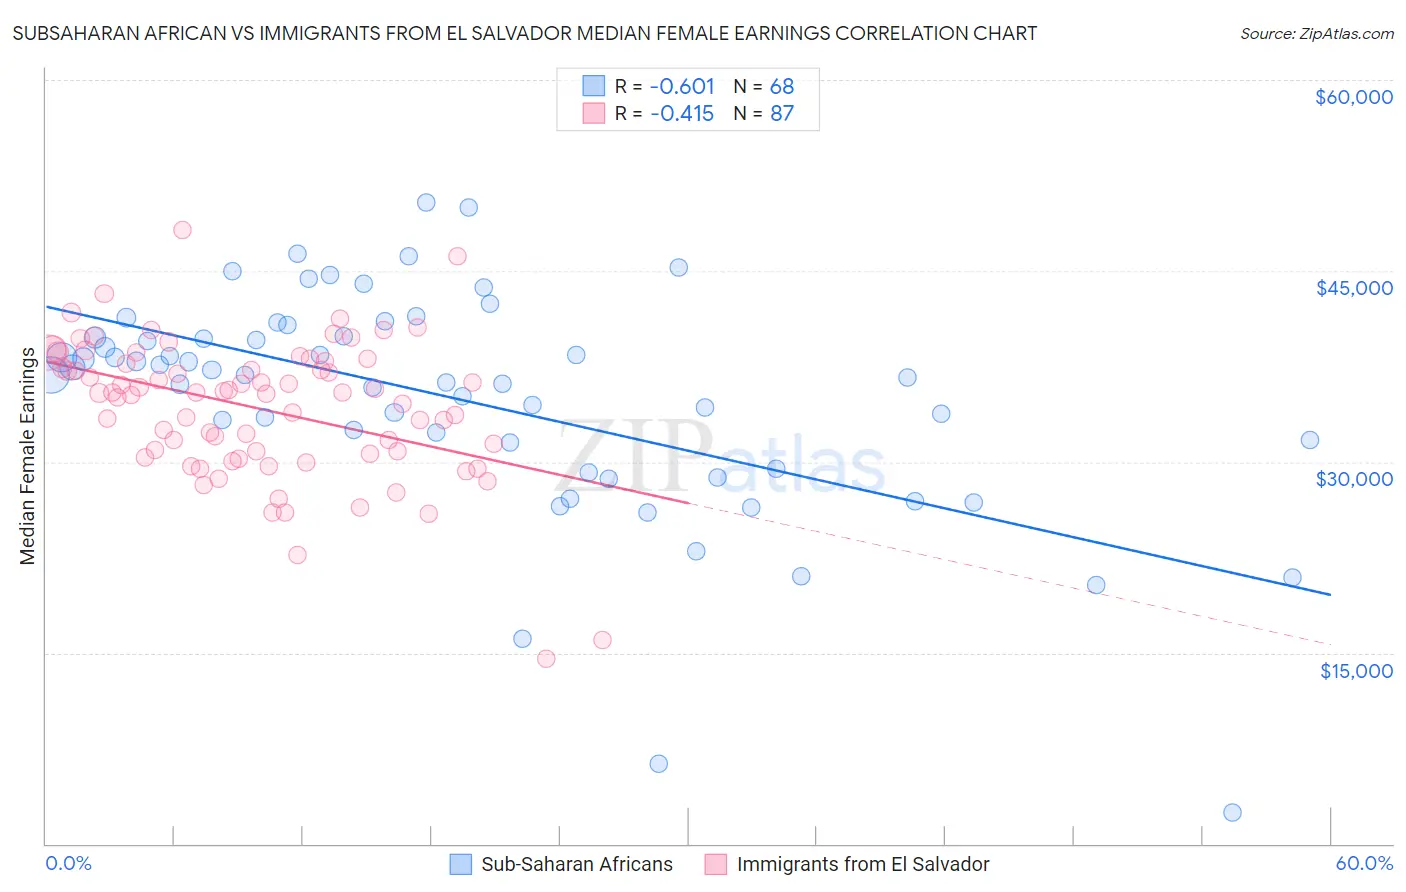 Subsaharan African vs Immigrants from El Salvador Median Female Earnings